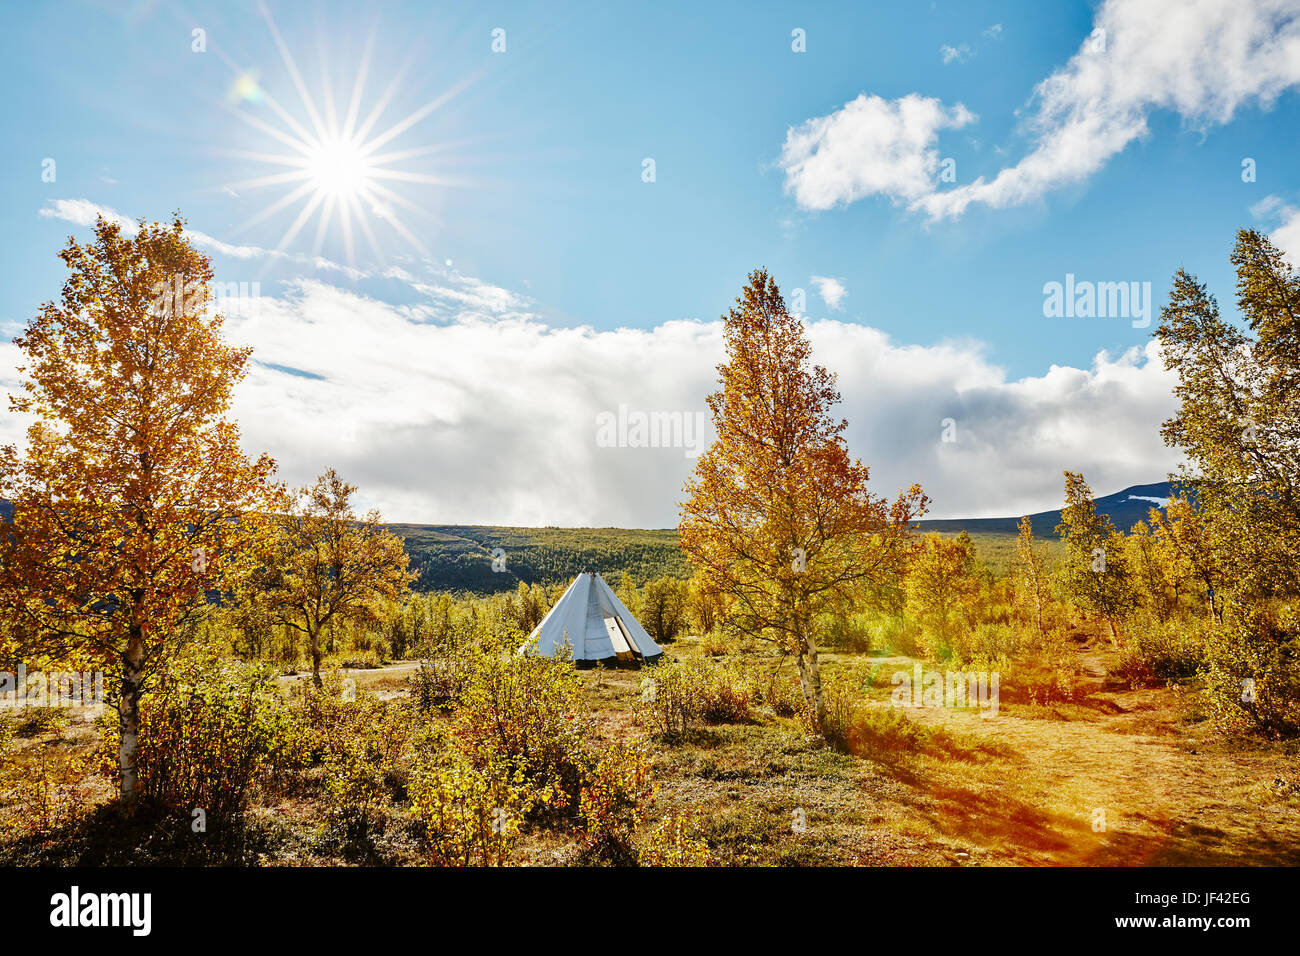 Tent in scenic landscape Stock Photo